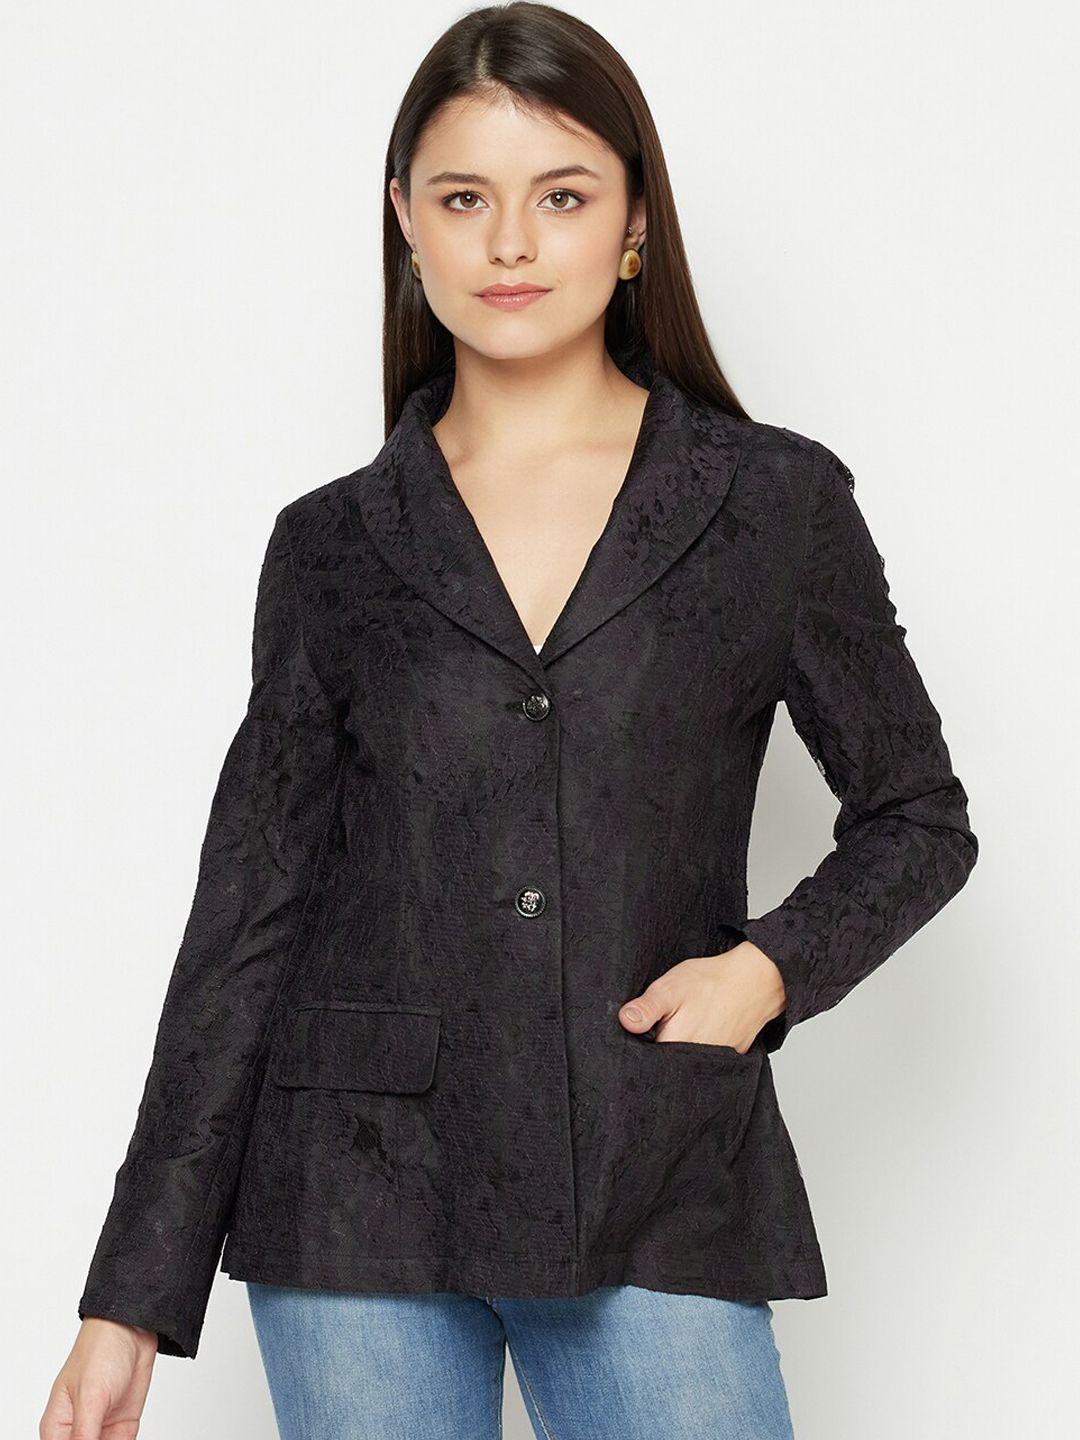 owncraft women black lace jacket